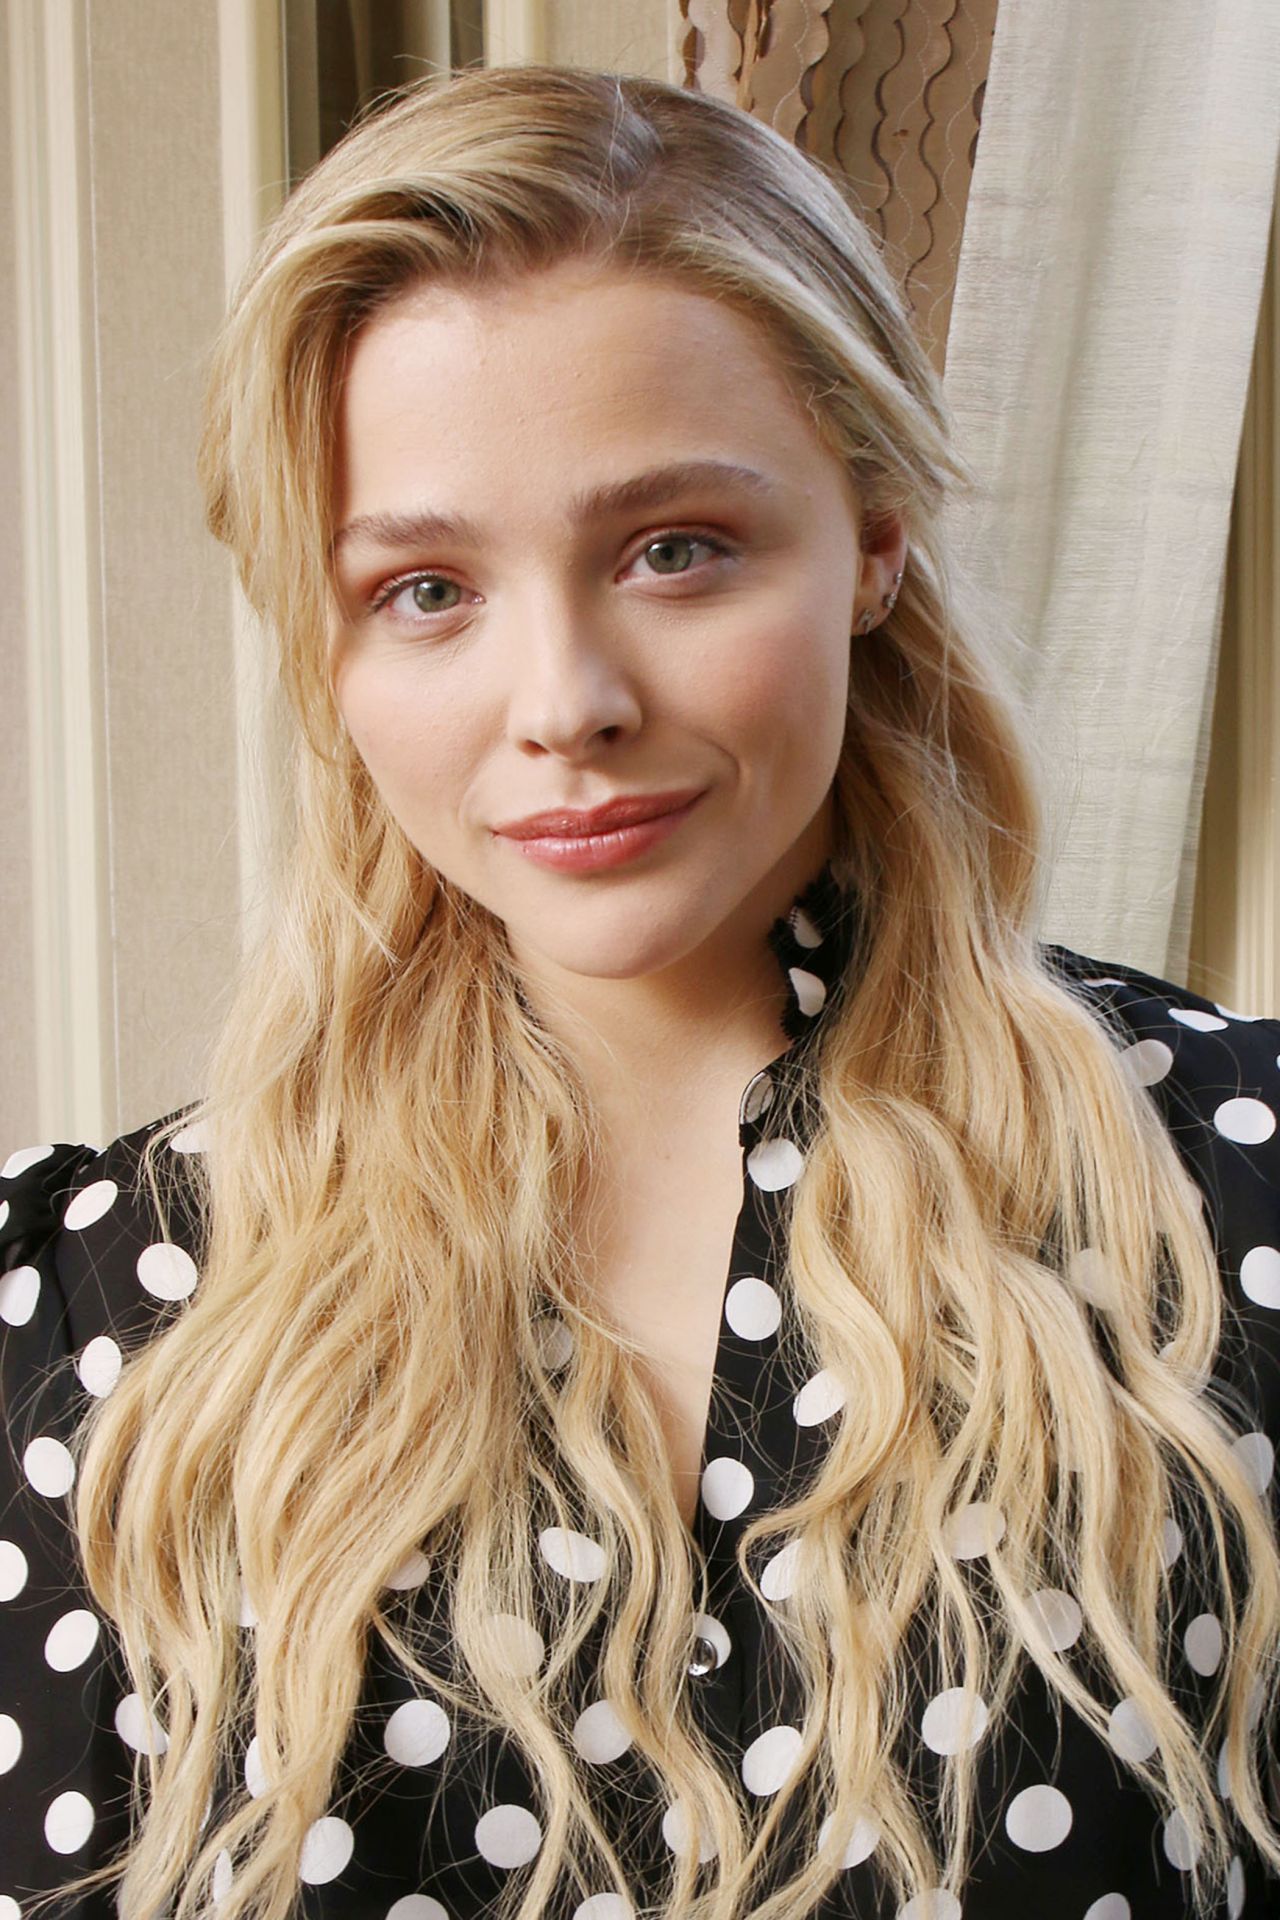 photo taken 2019 actress age 22